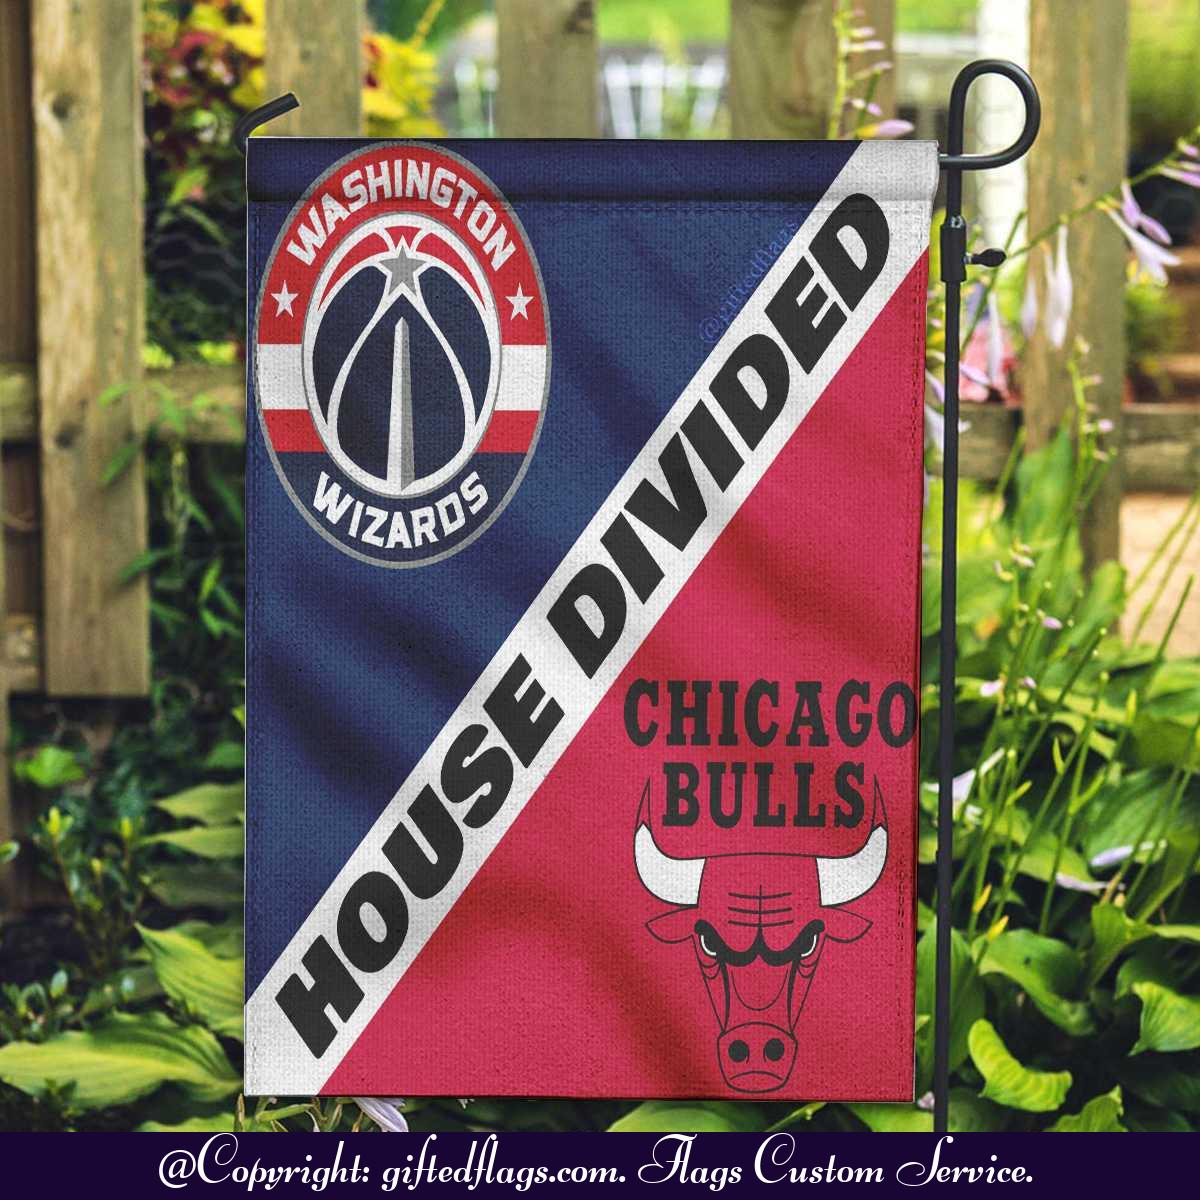 Washington Wizards vs. Chicago Bulls House Divided Flag, Wizards House Divided Flag